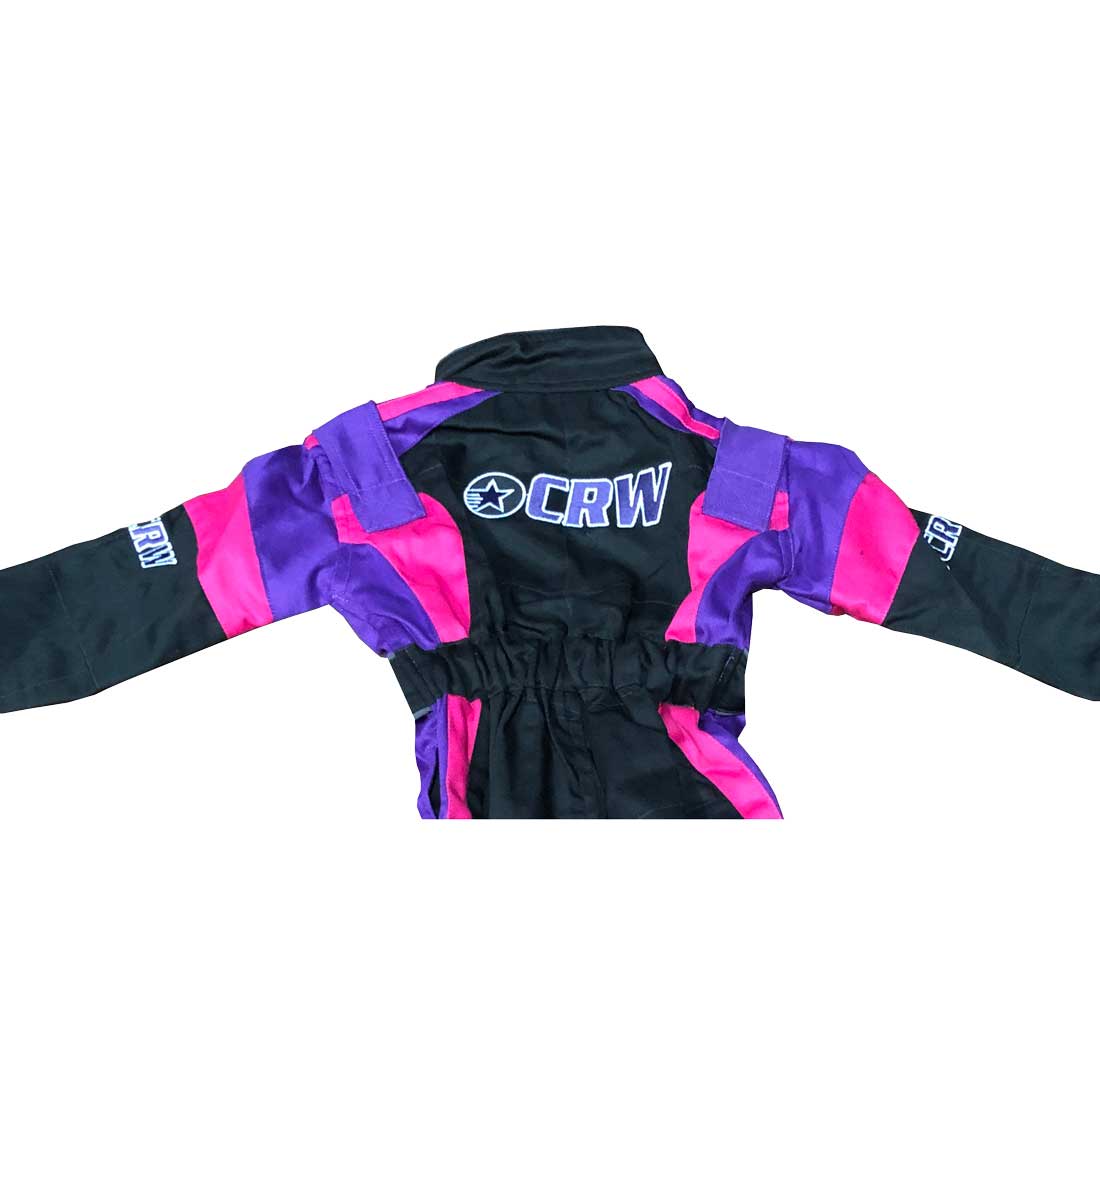 Kids Podium Pit Crew Suit - Black/Pink/Purple